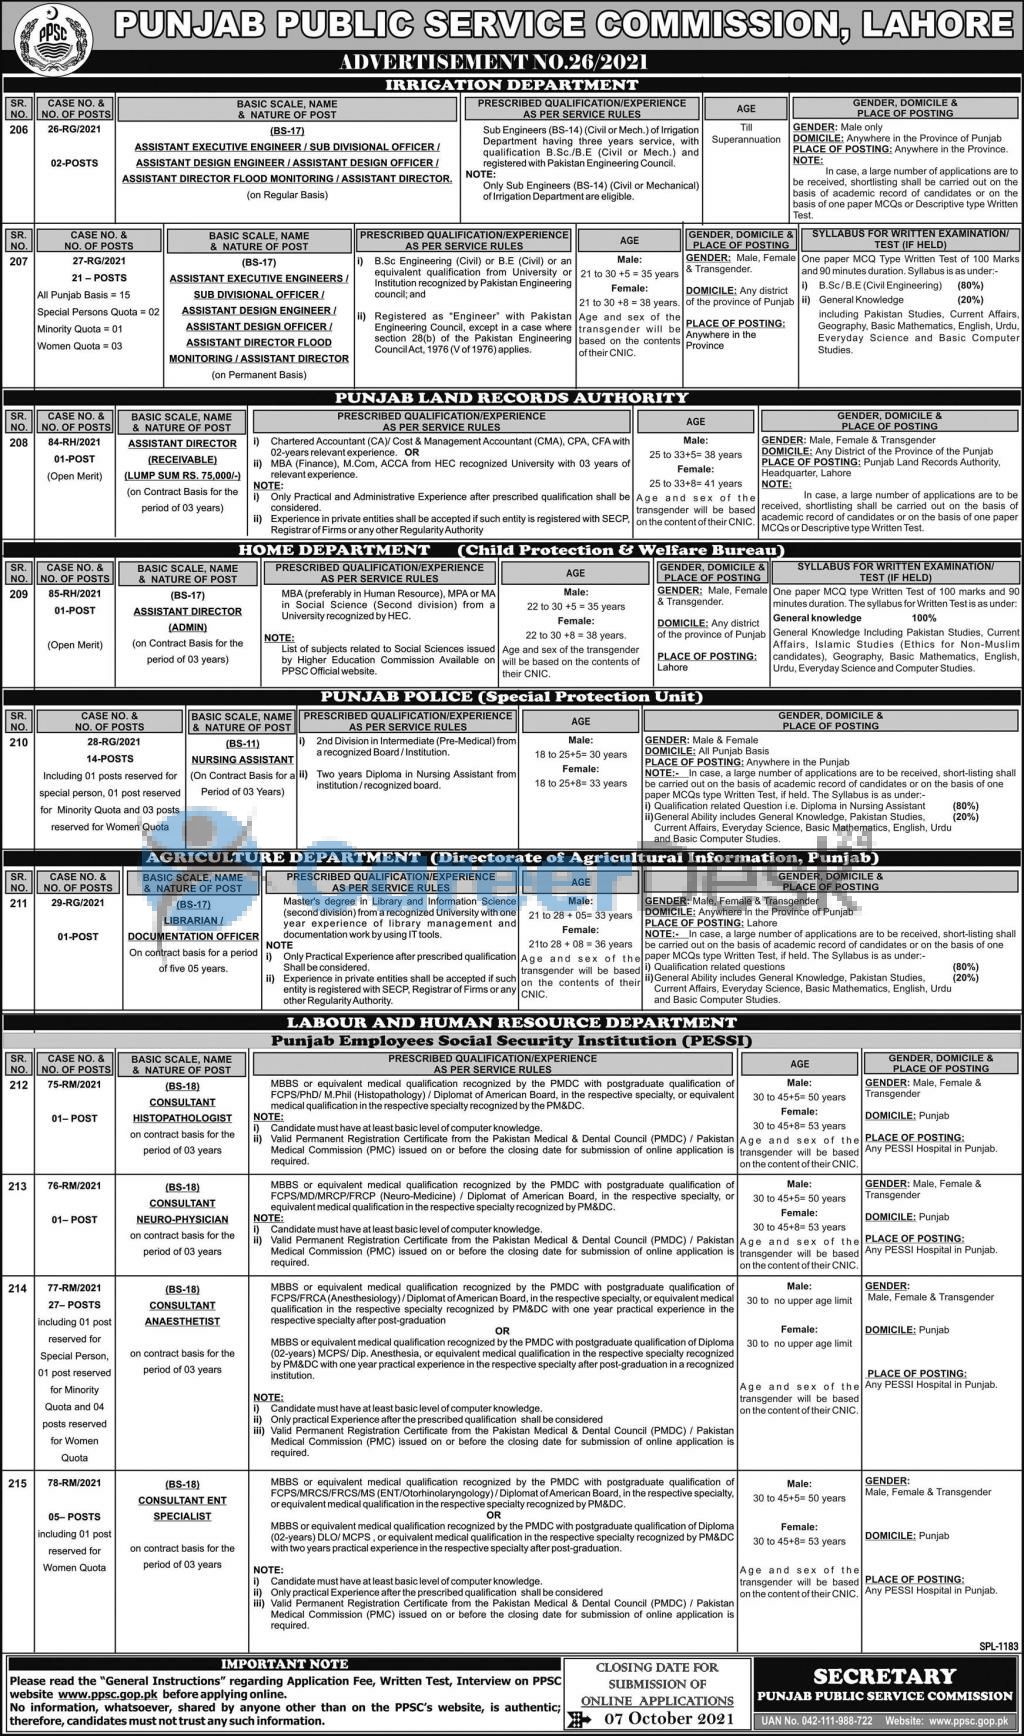 PPSC Punjab Public Service Commission New Jobs 2021 Adv No 25/2021